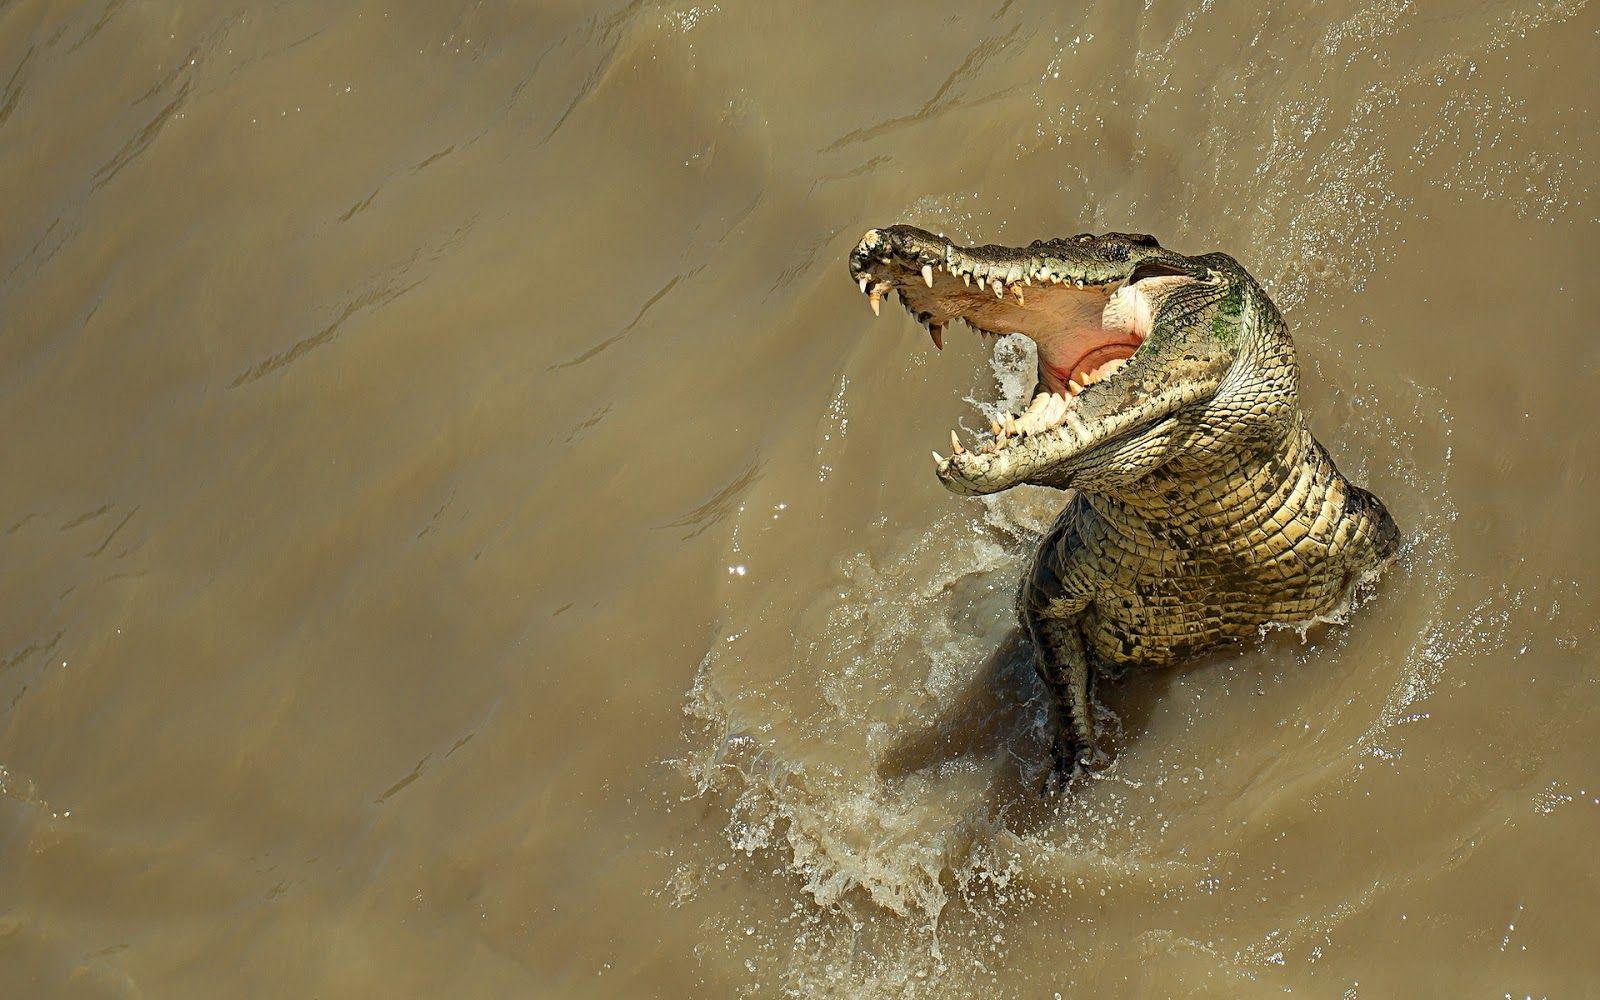 WildLife: Alligator new HD Wallpaper 2012